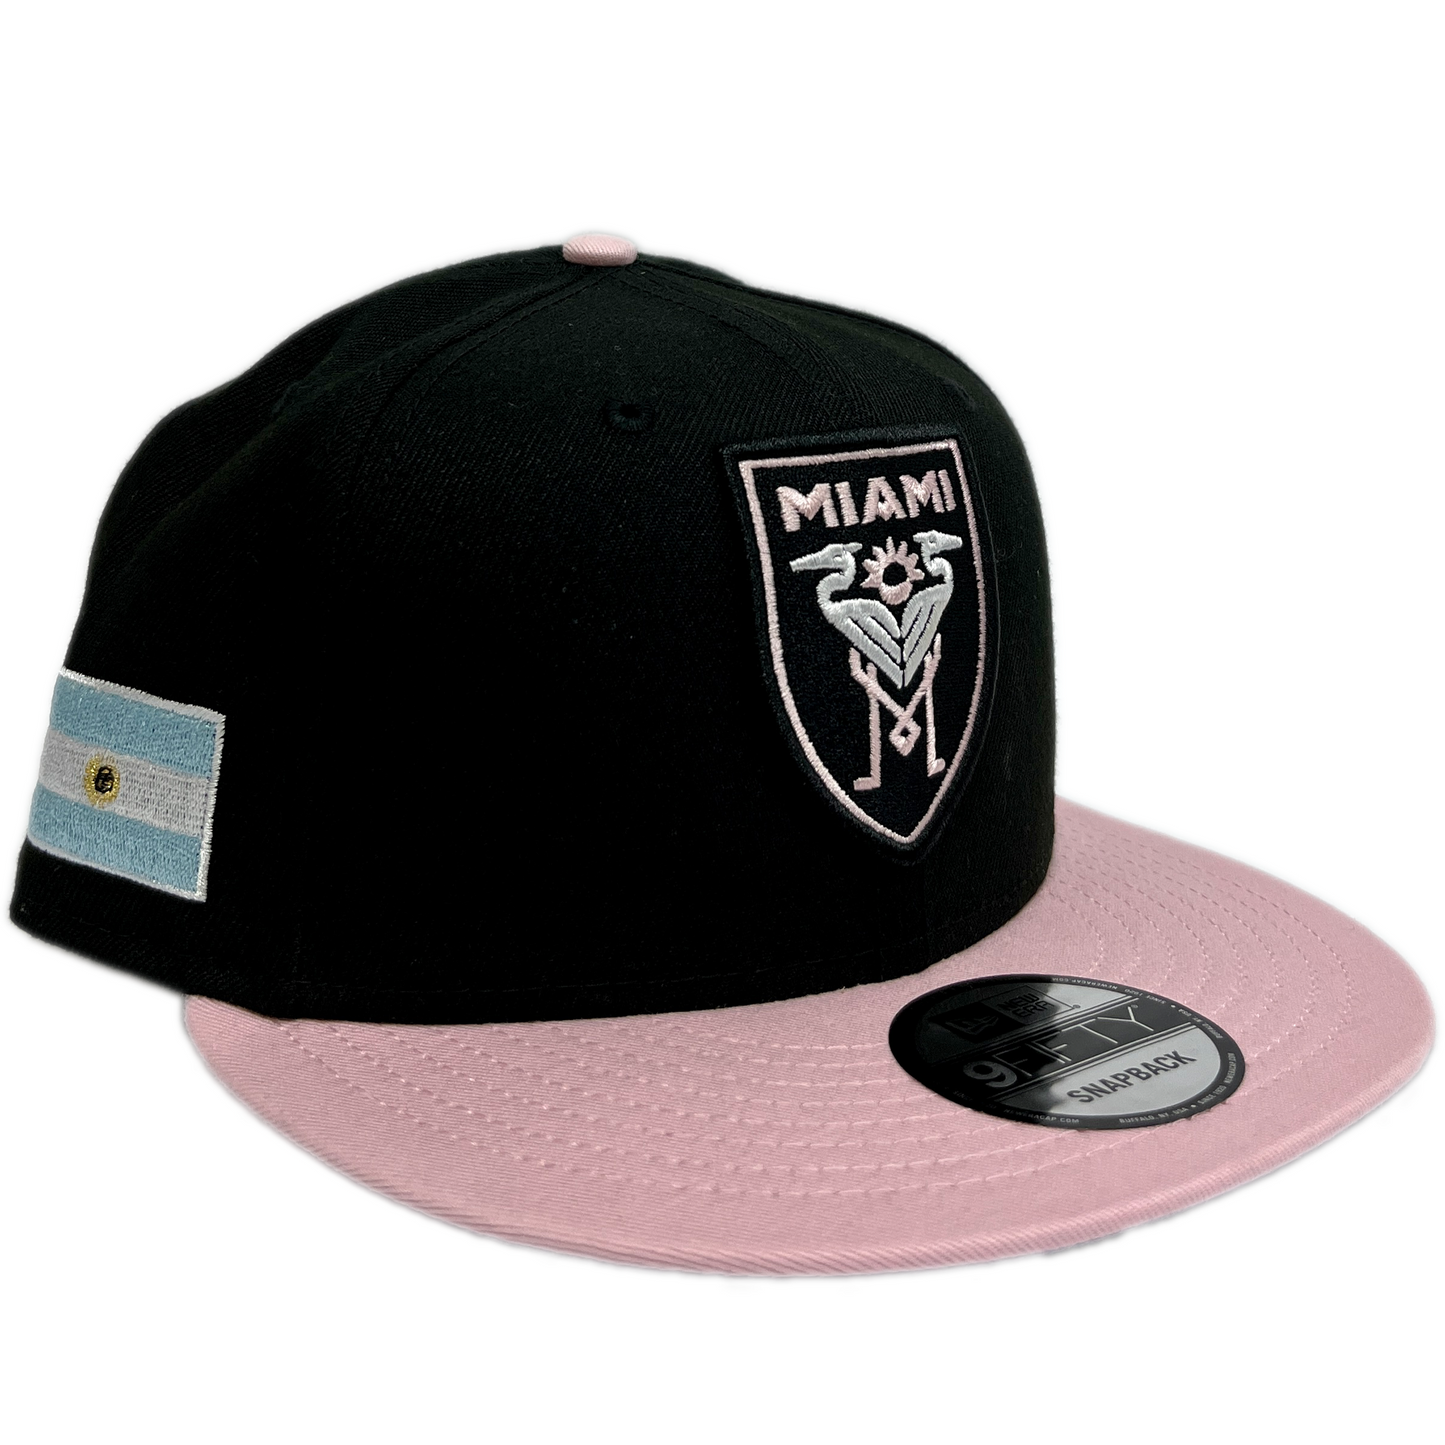 New Era Inter Miami 9FIFTY Adjustable Hat - Black/ Pink